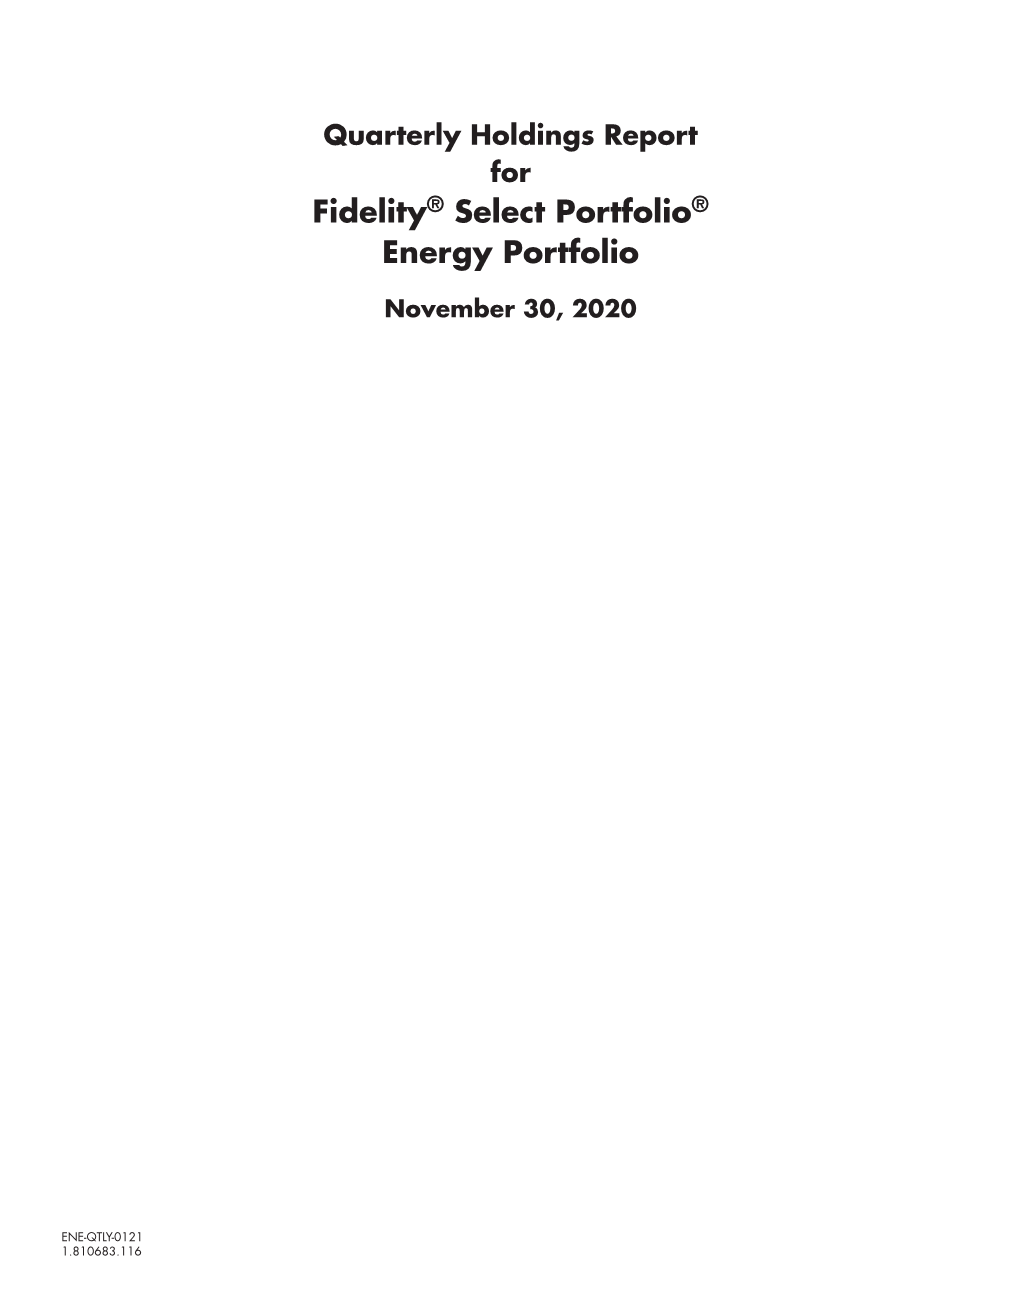 Fidelity® Select Portfolio® Energy Portfolio